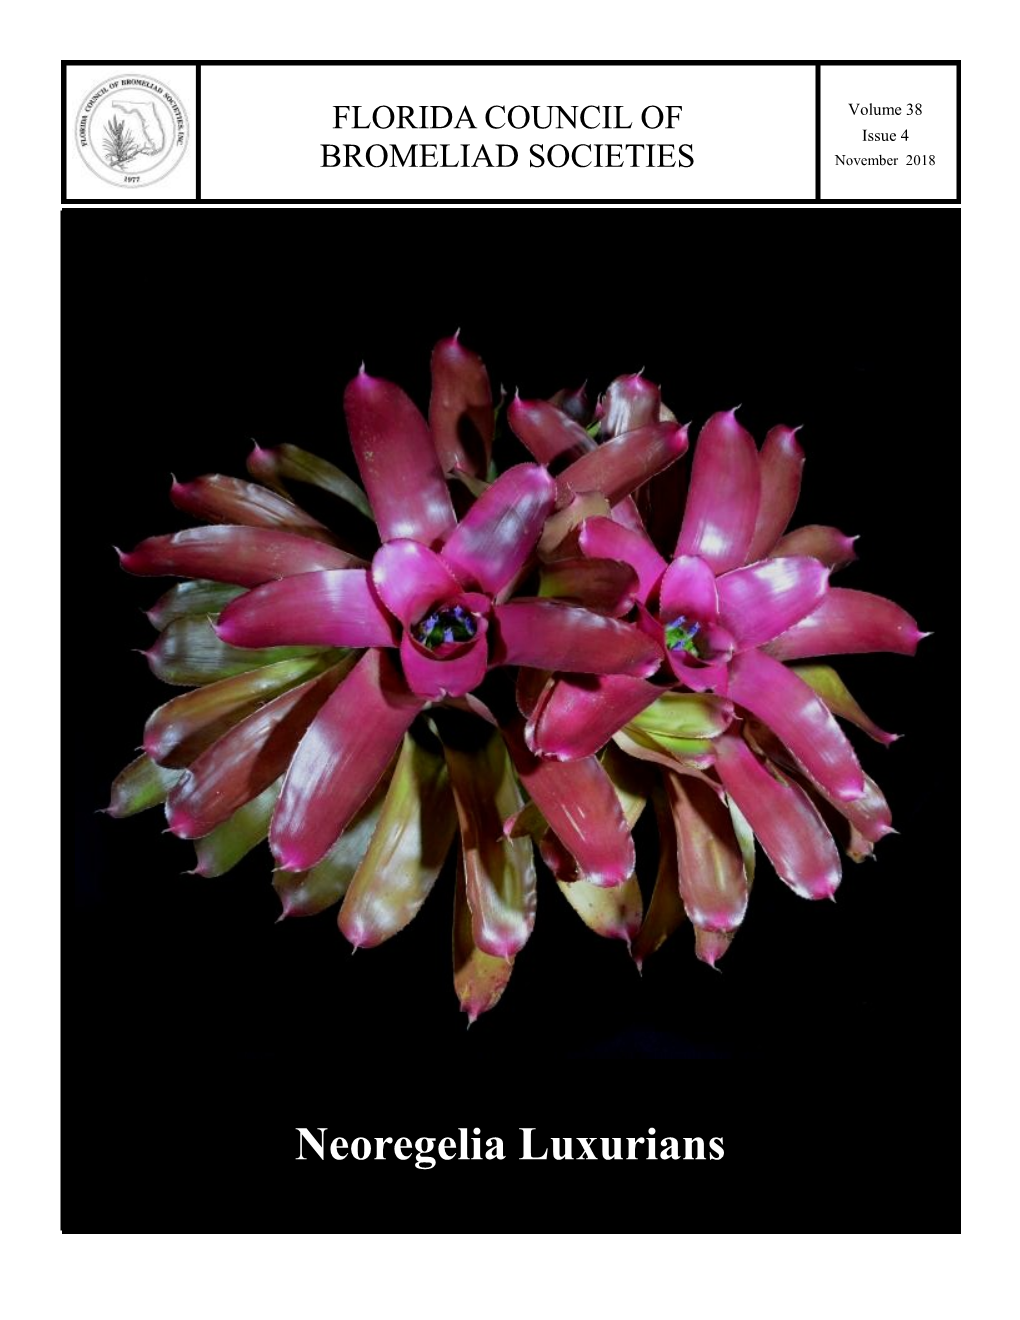 Neoregelia Luxurians FLORIDA COUNCIL of BROMELIAD SOCIETIES Page 2